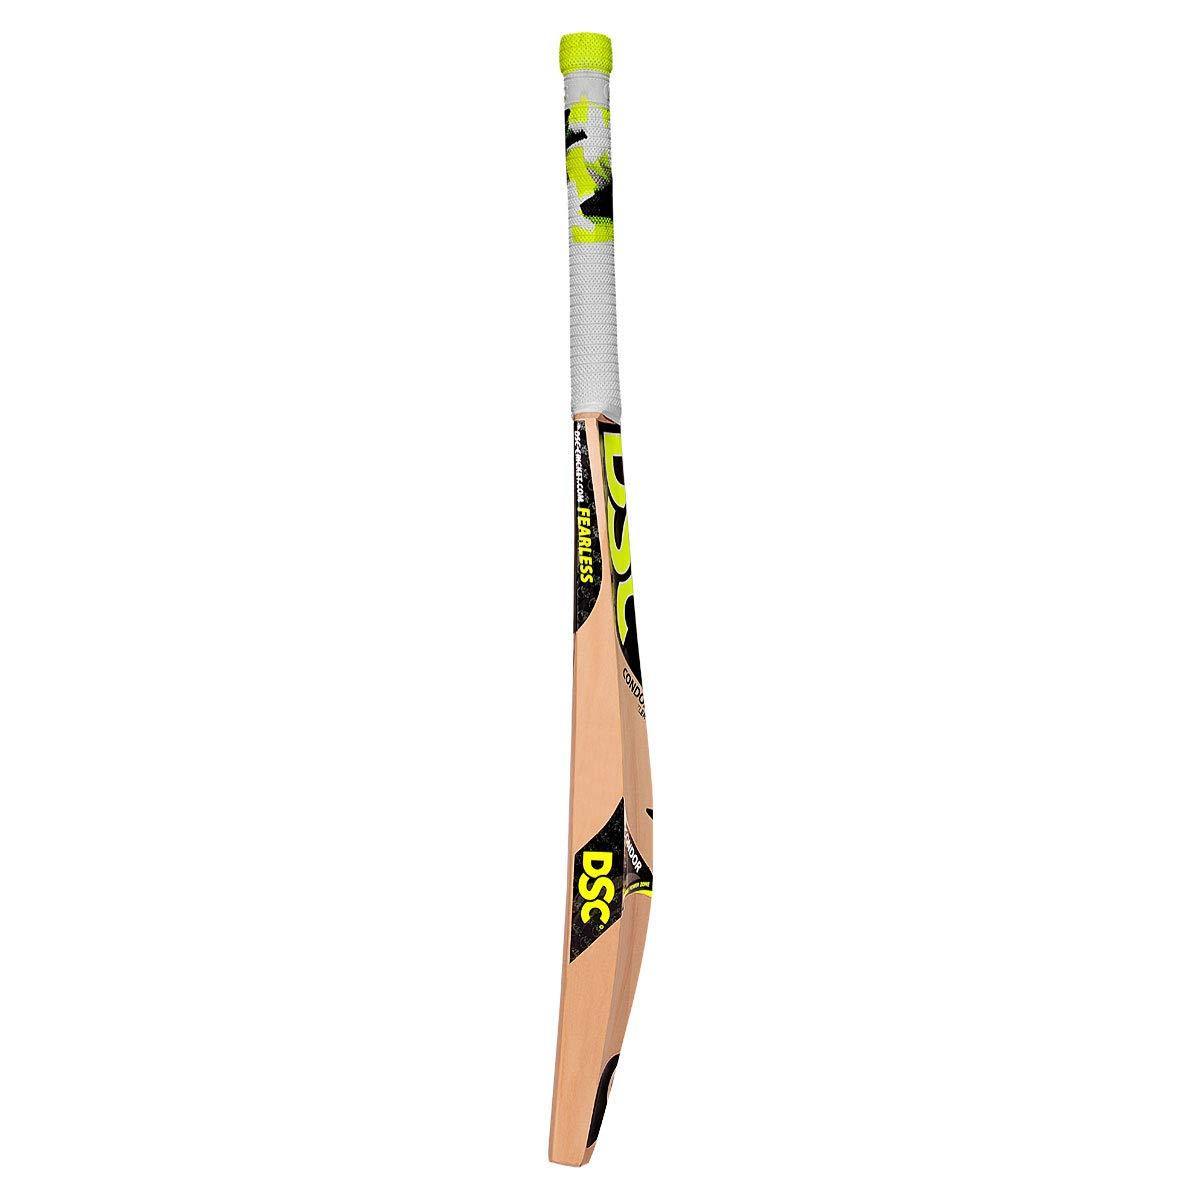 DSC Condor Blitzer Kashmir Willow Cricket Bat - Best Price online Prokicksports.com